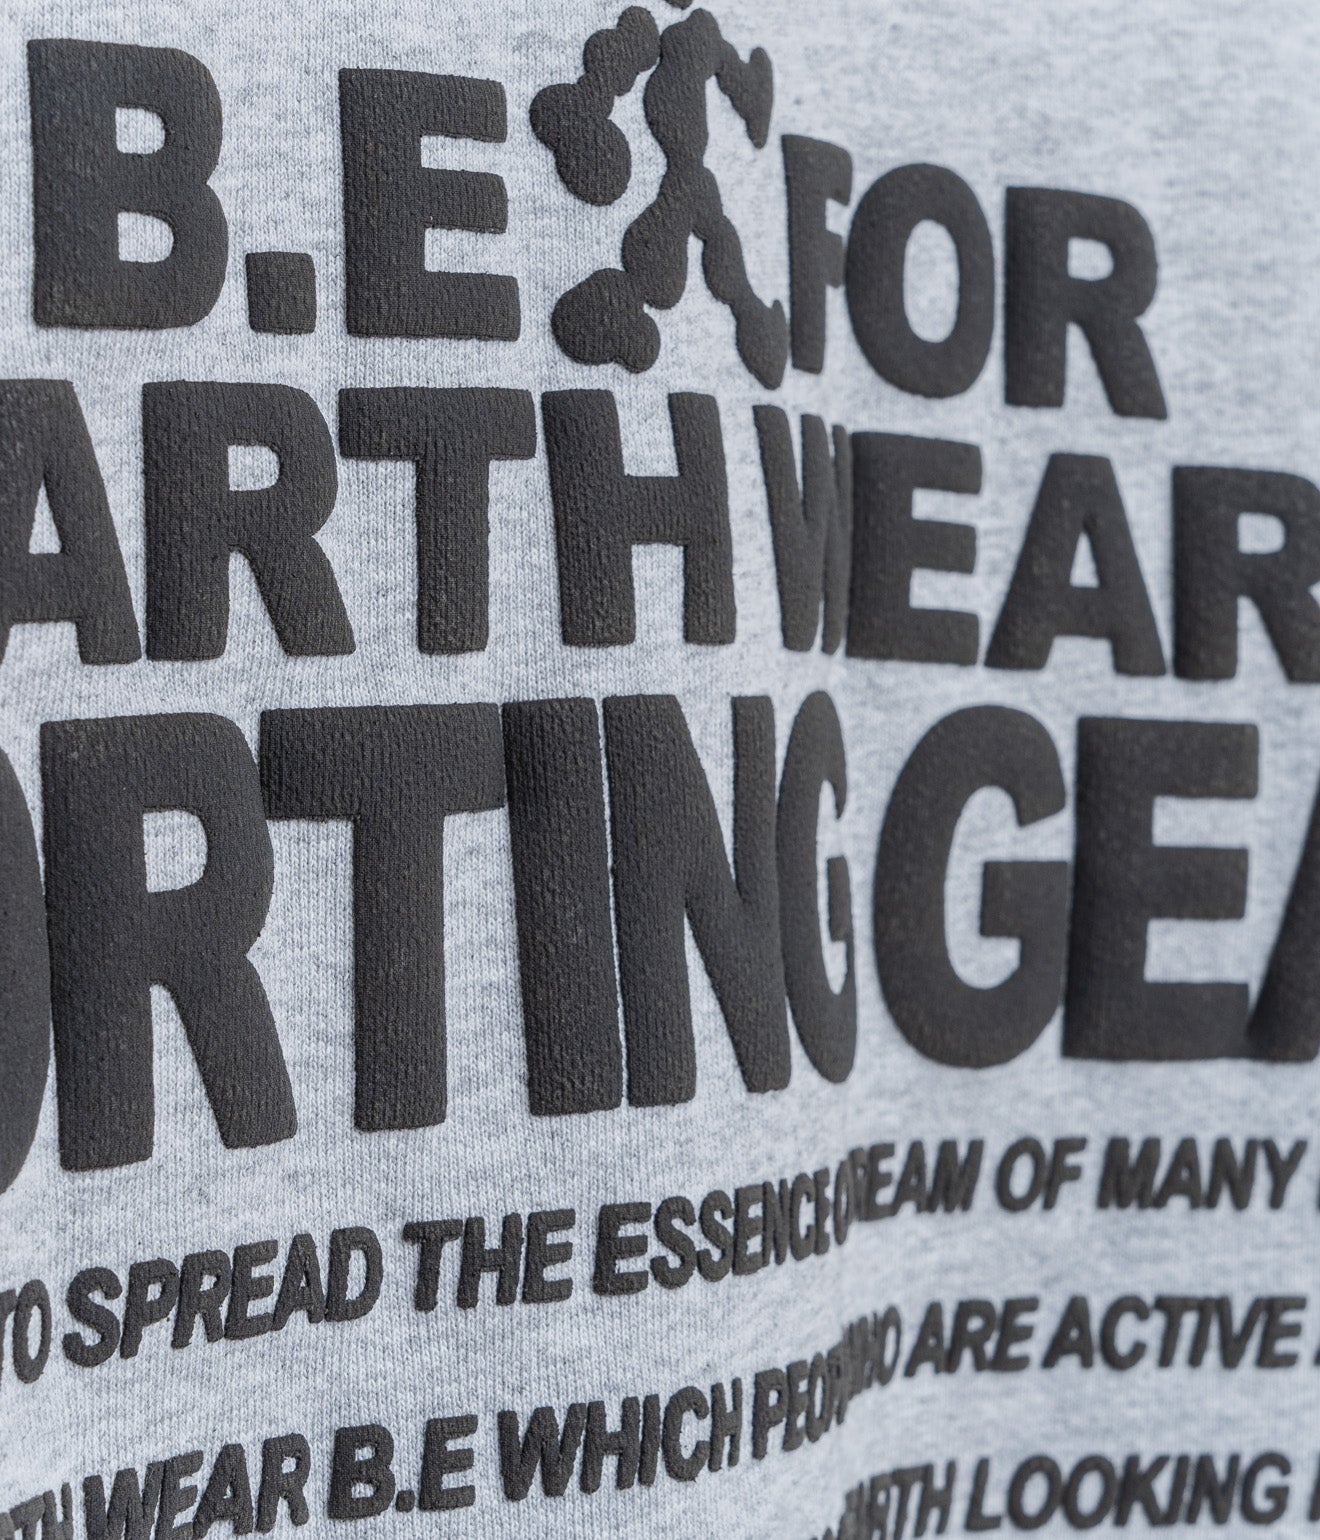 b.Eautiful "Earth Wear Crewneck Sweatshirt" - WEAREALLANIMALS